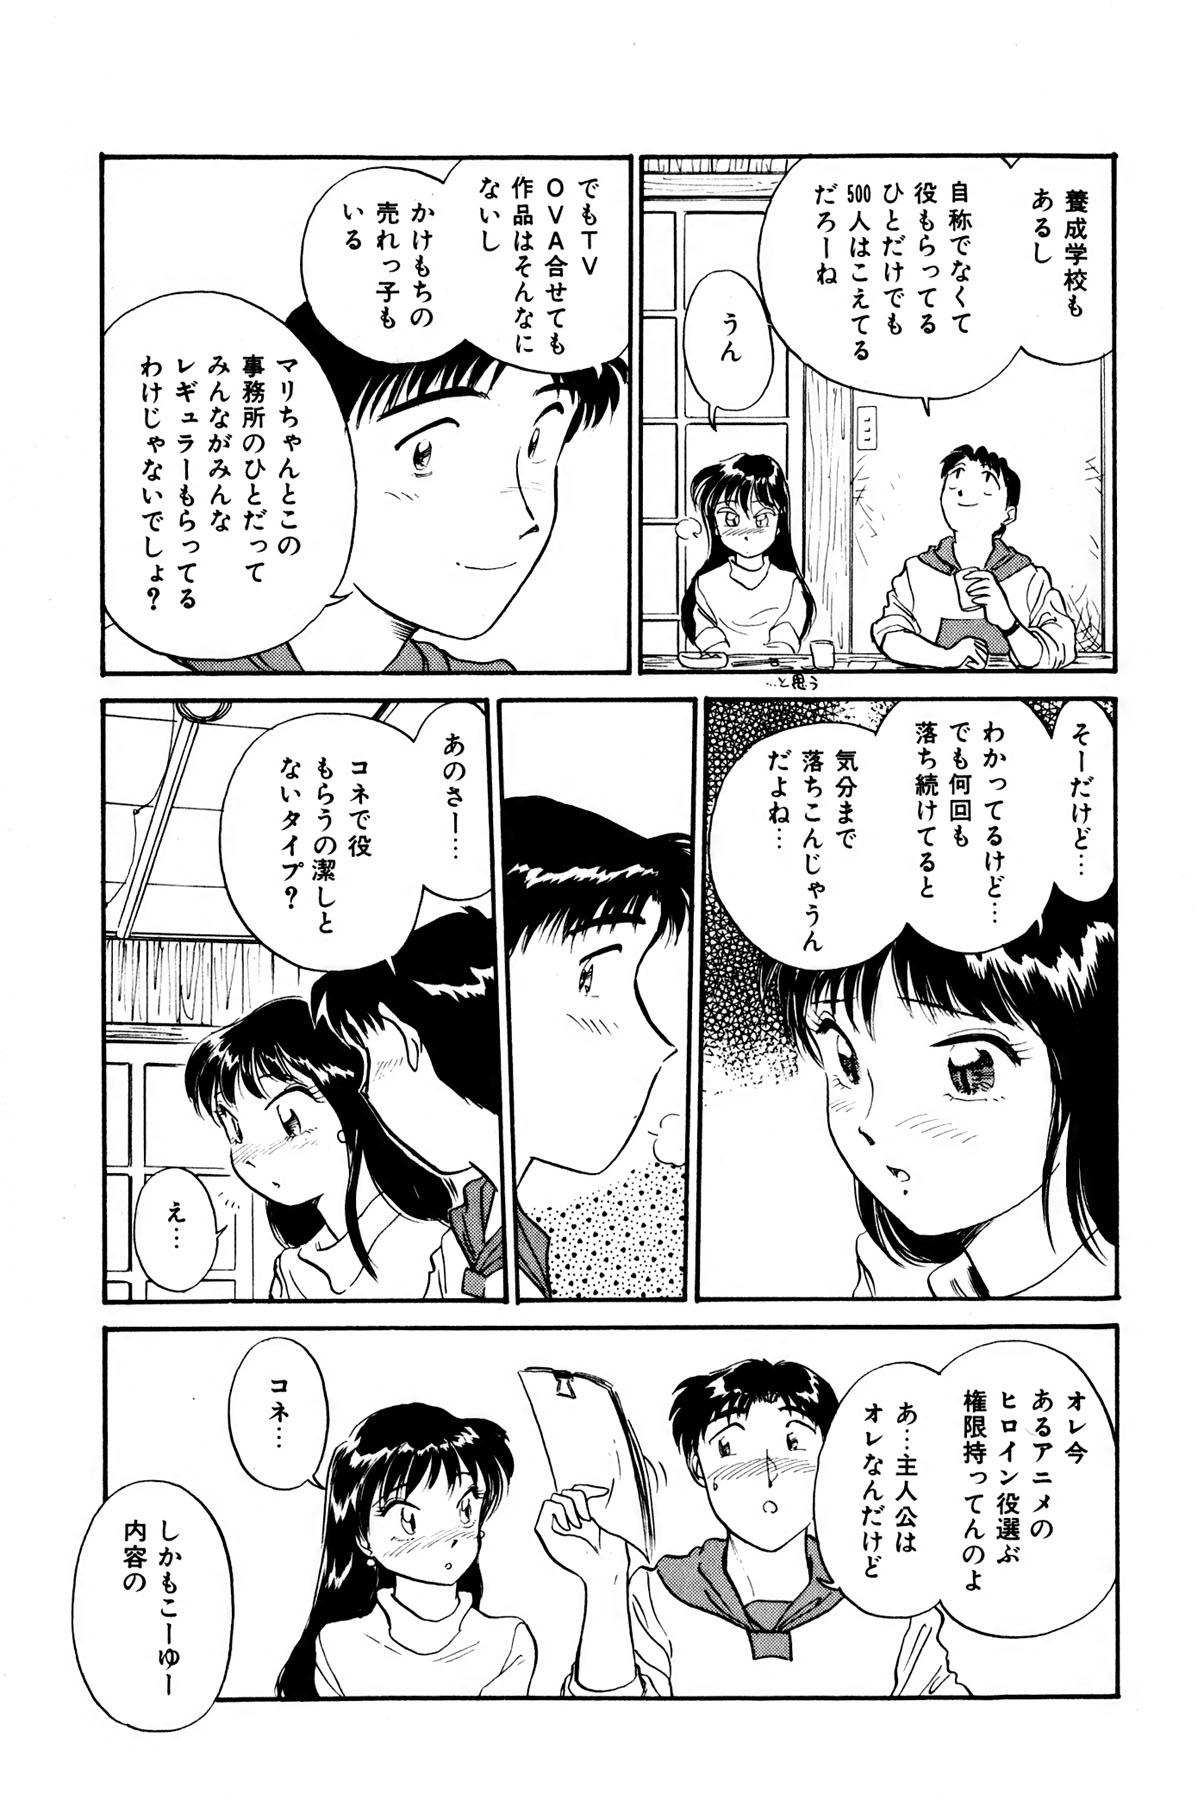 Otakara Comic 167